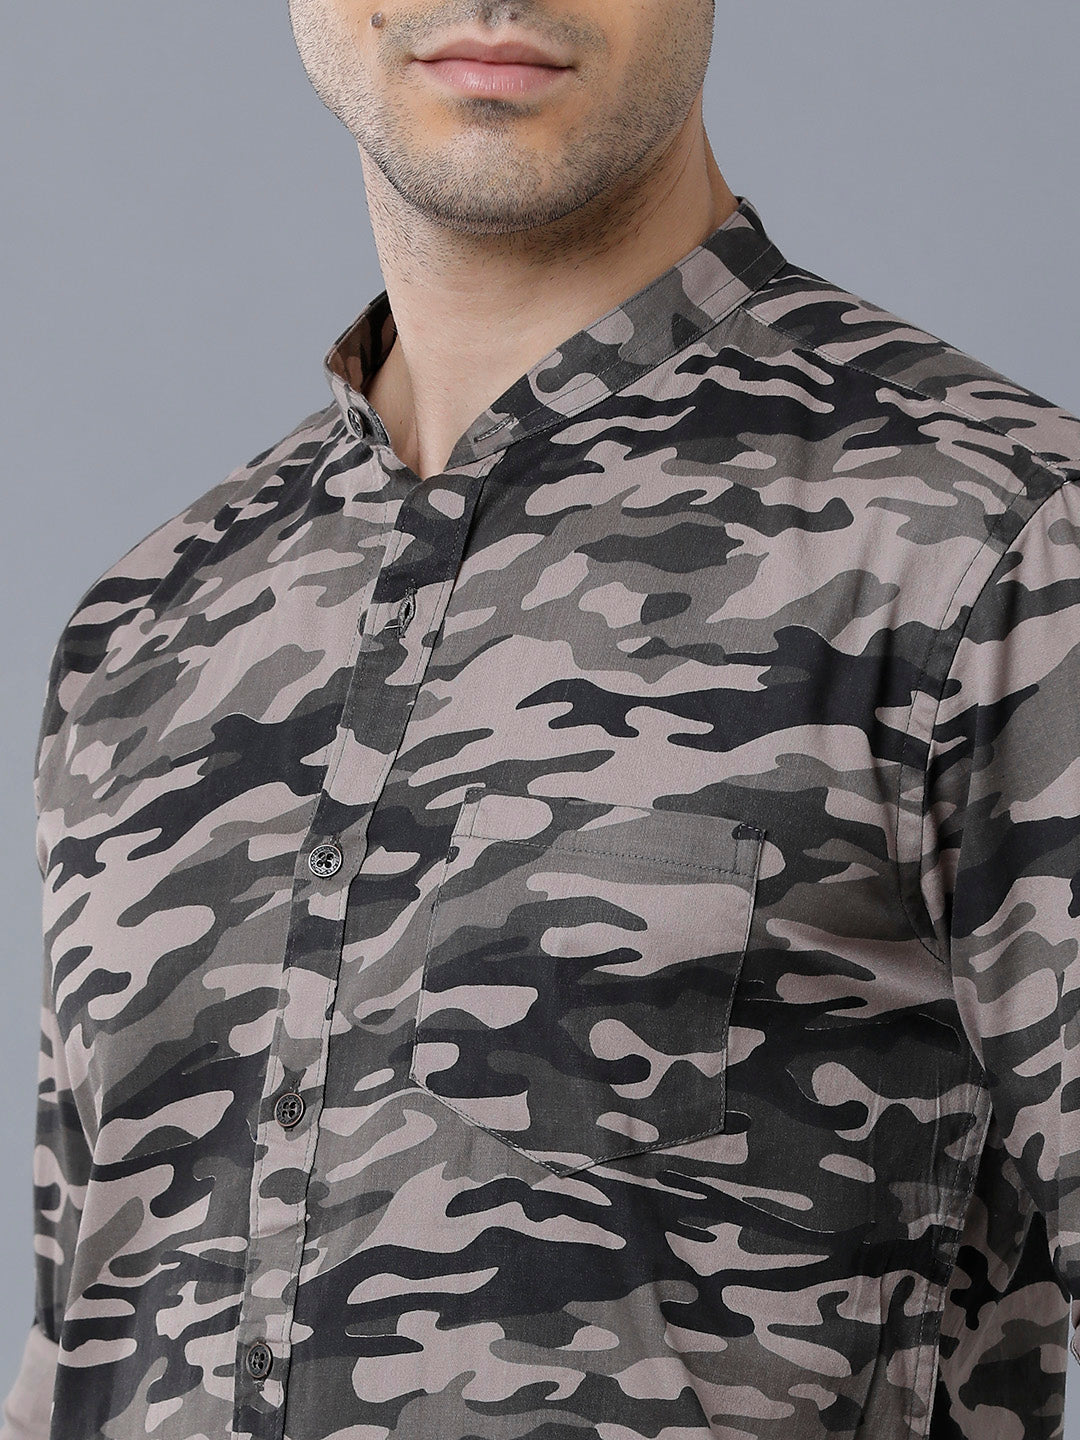 Camouflage Shirt